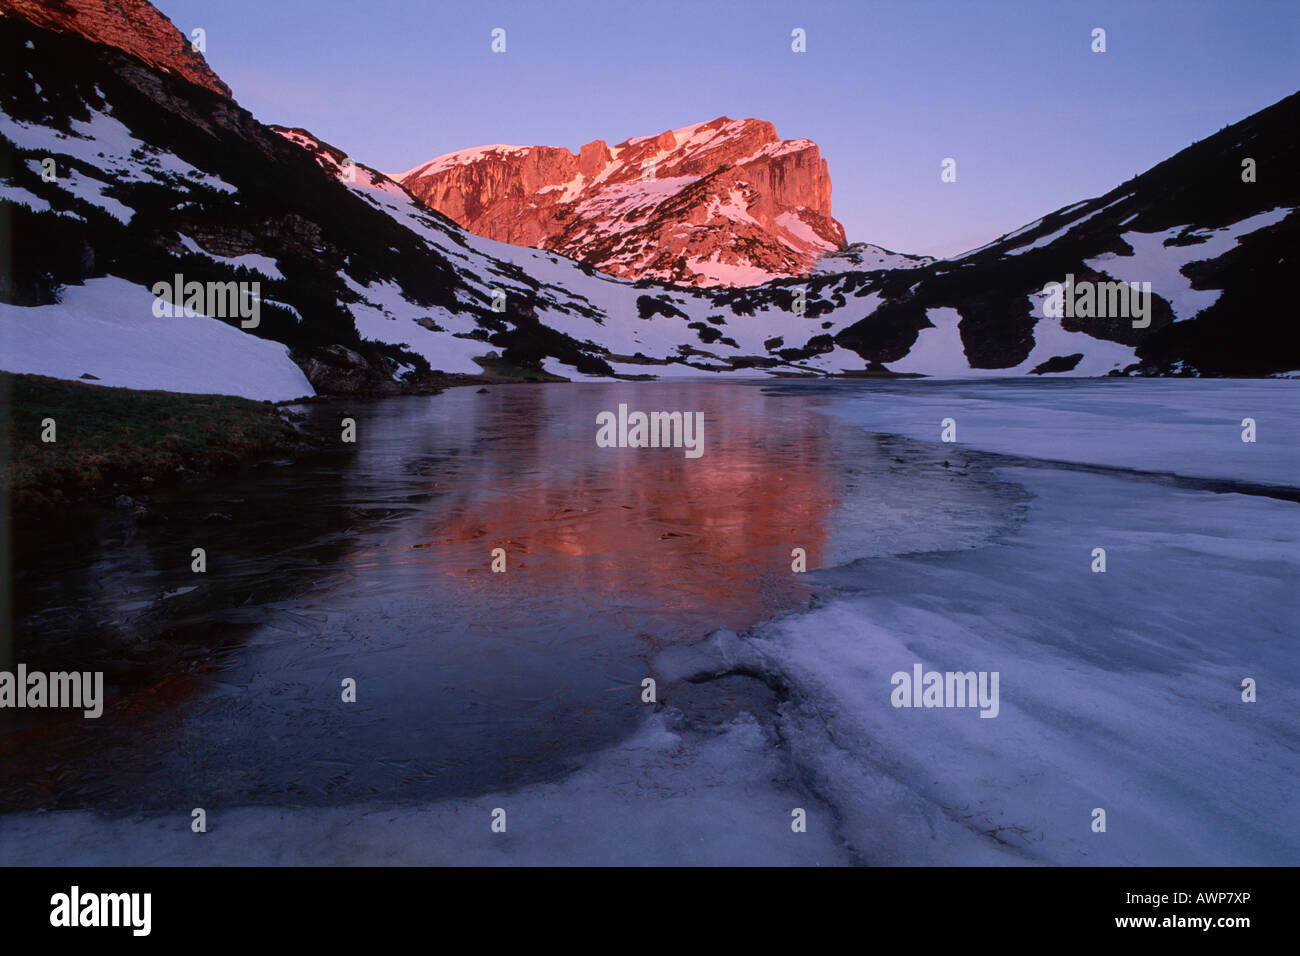 Mt. Rofanspitze reflected in the surface of Zireiner See (Zirein Lake), North Tirol, Austria, Europe Stock Photo